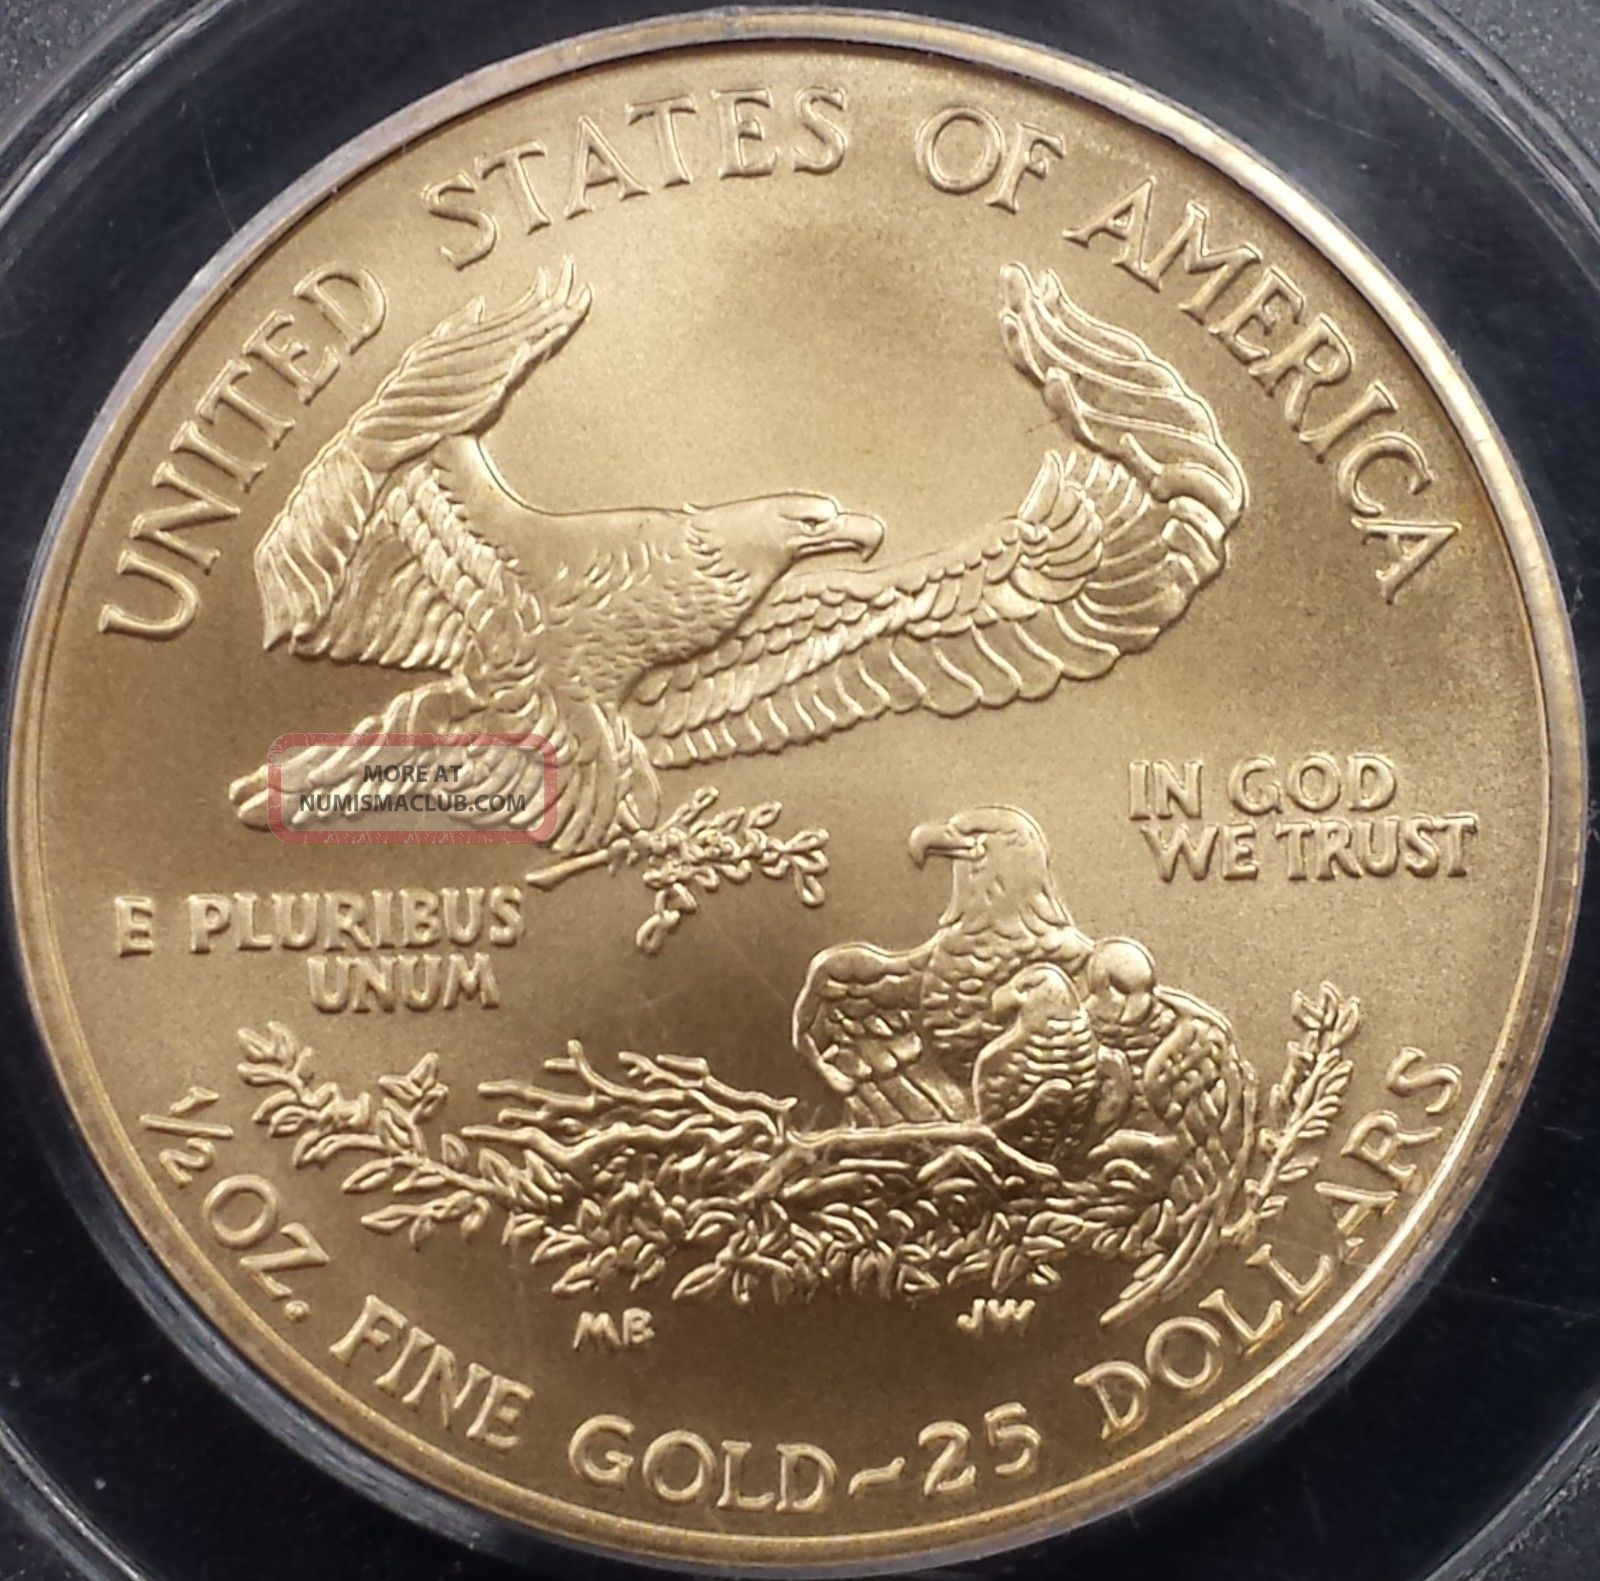 2008 W Burnished Twenty Five Dollars ($25) American Gold Eagle 1/2 Oz